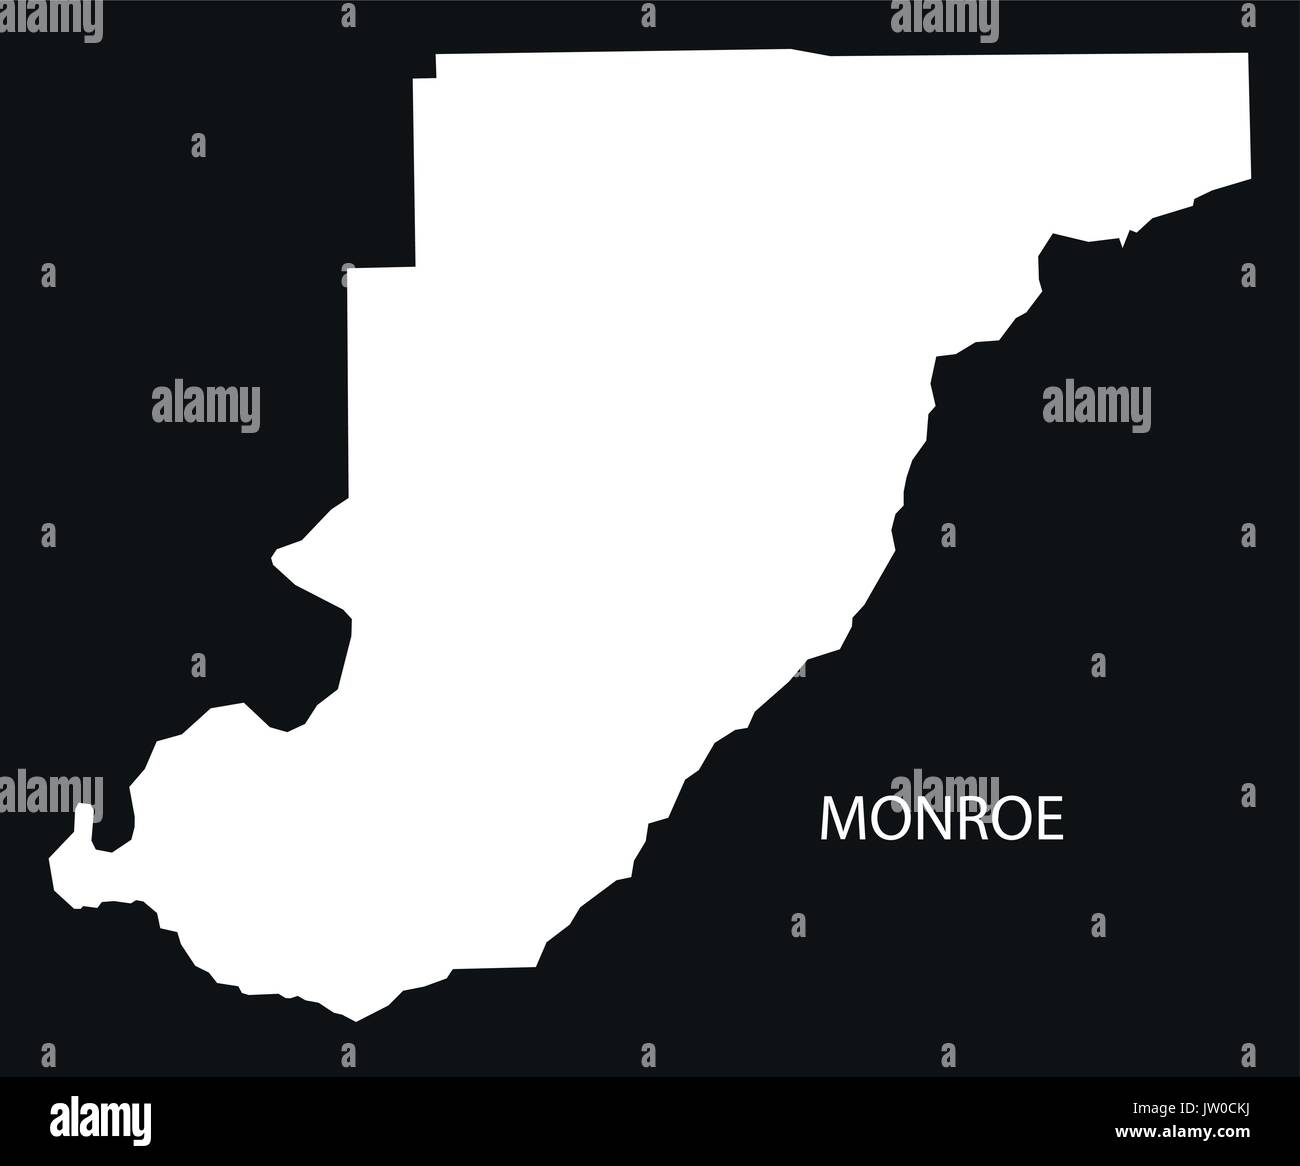 Monroe county map of Alabama USA black inverted illustration Stock Vector